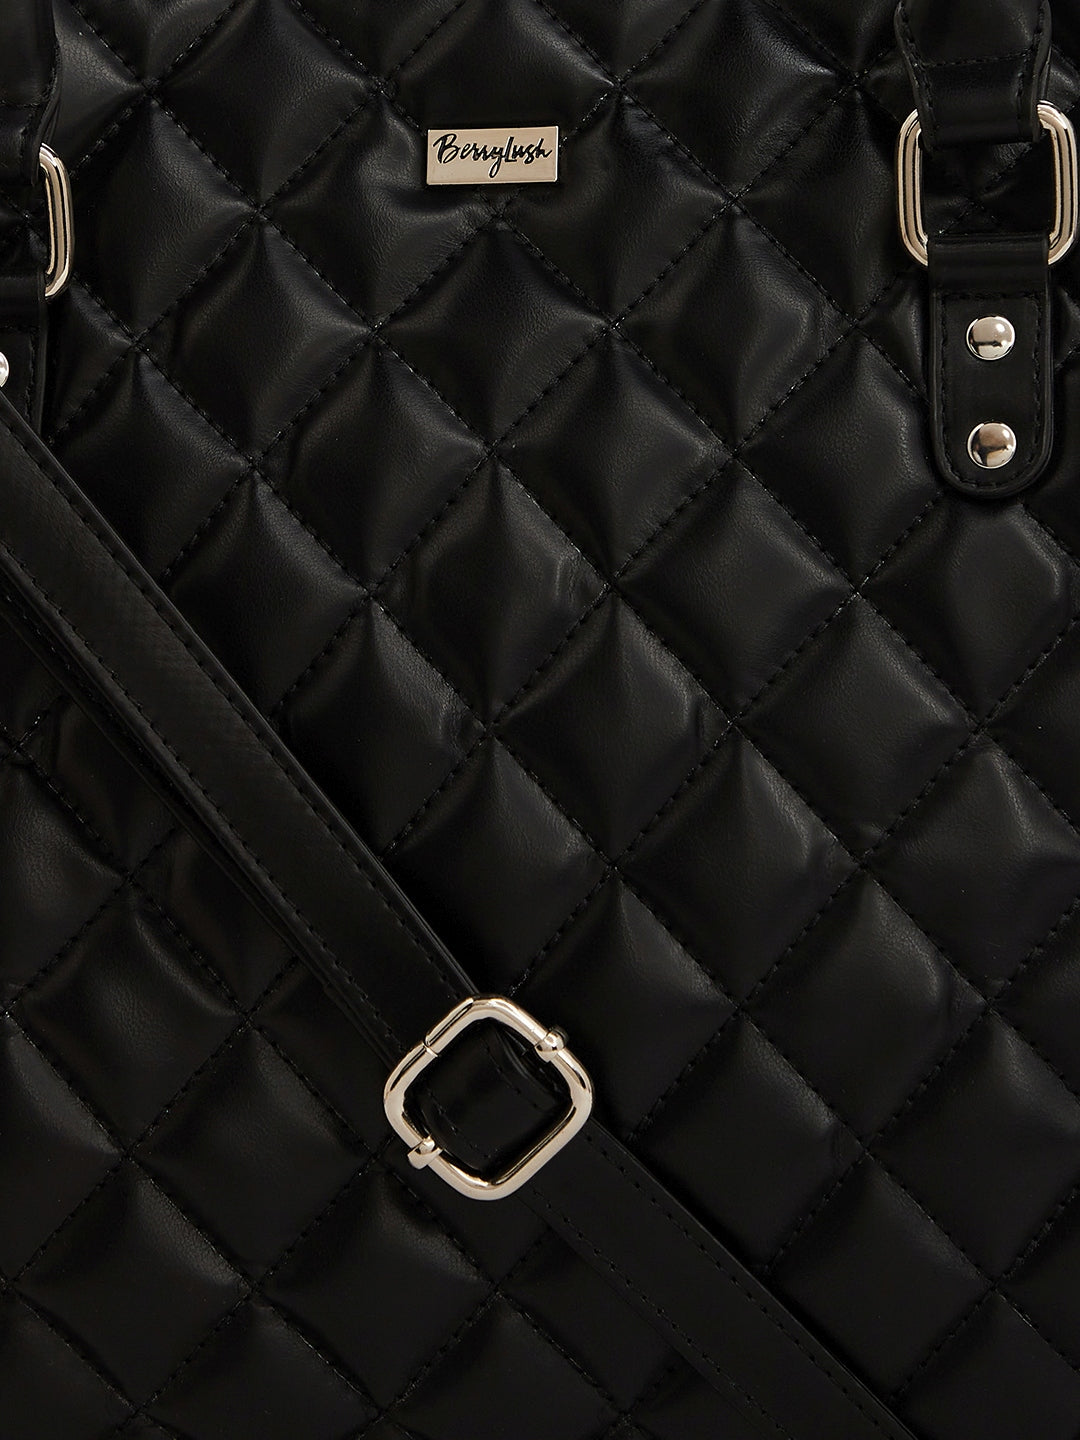 Buy Leather Villa Mens and Womens Laptop Bag Black at Amazonin